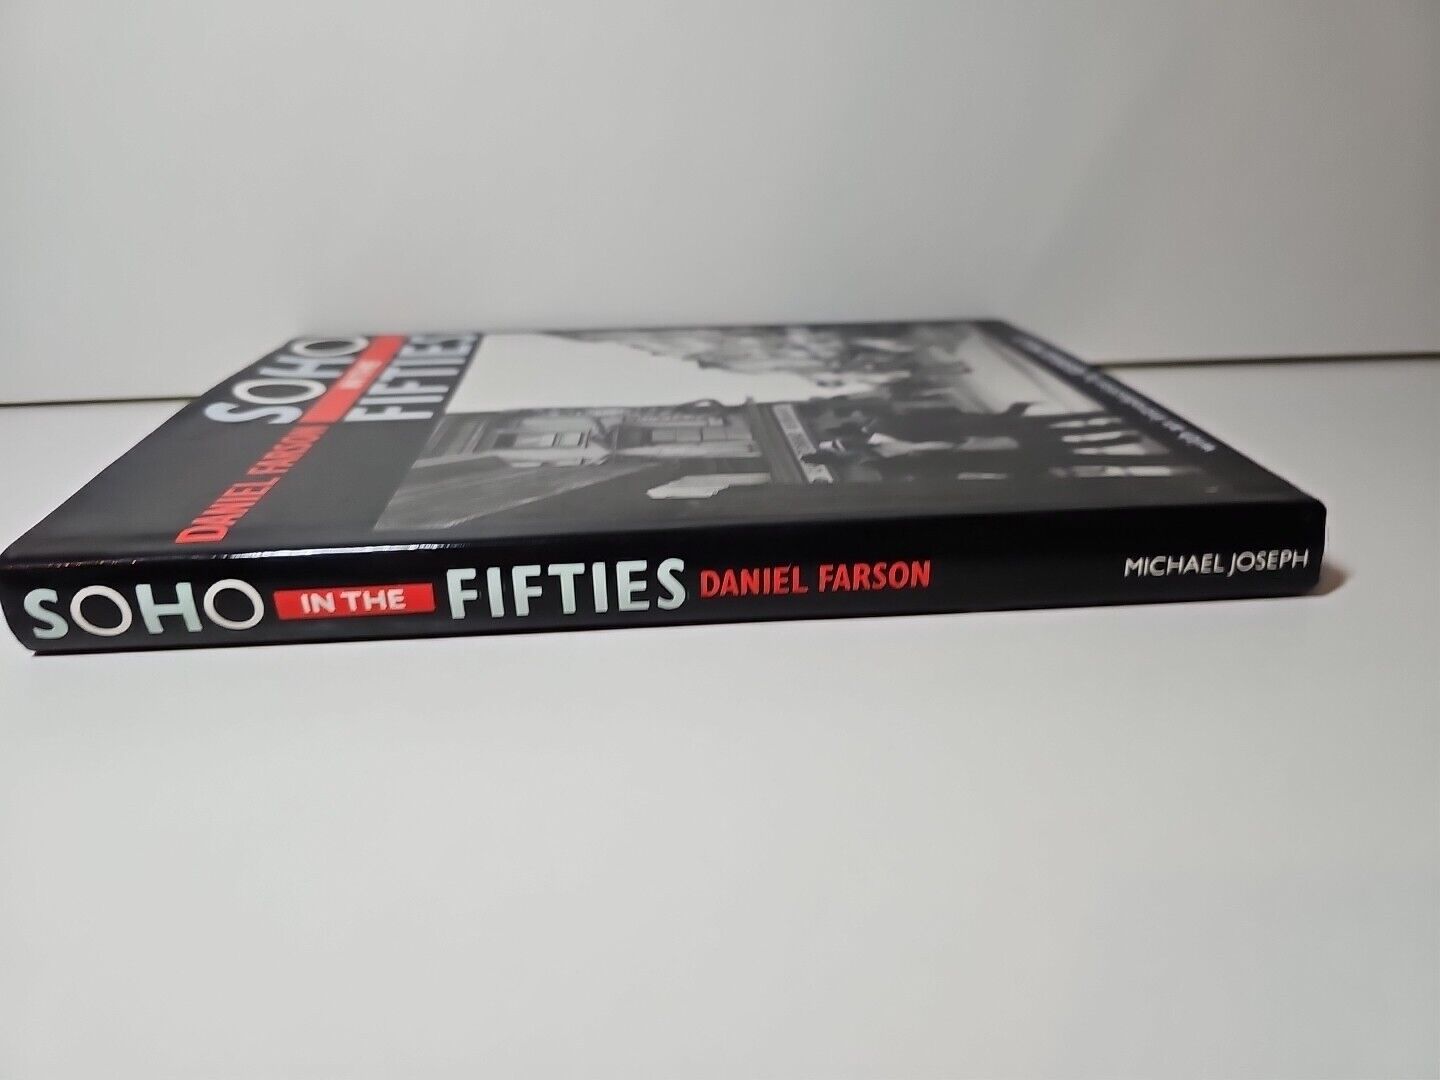 Soho in the Fifties by Daniel Farson (Hardcover, 1987)